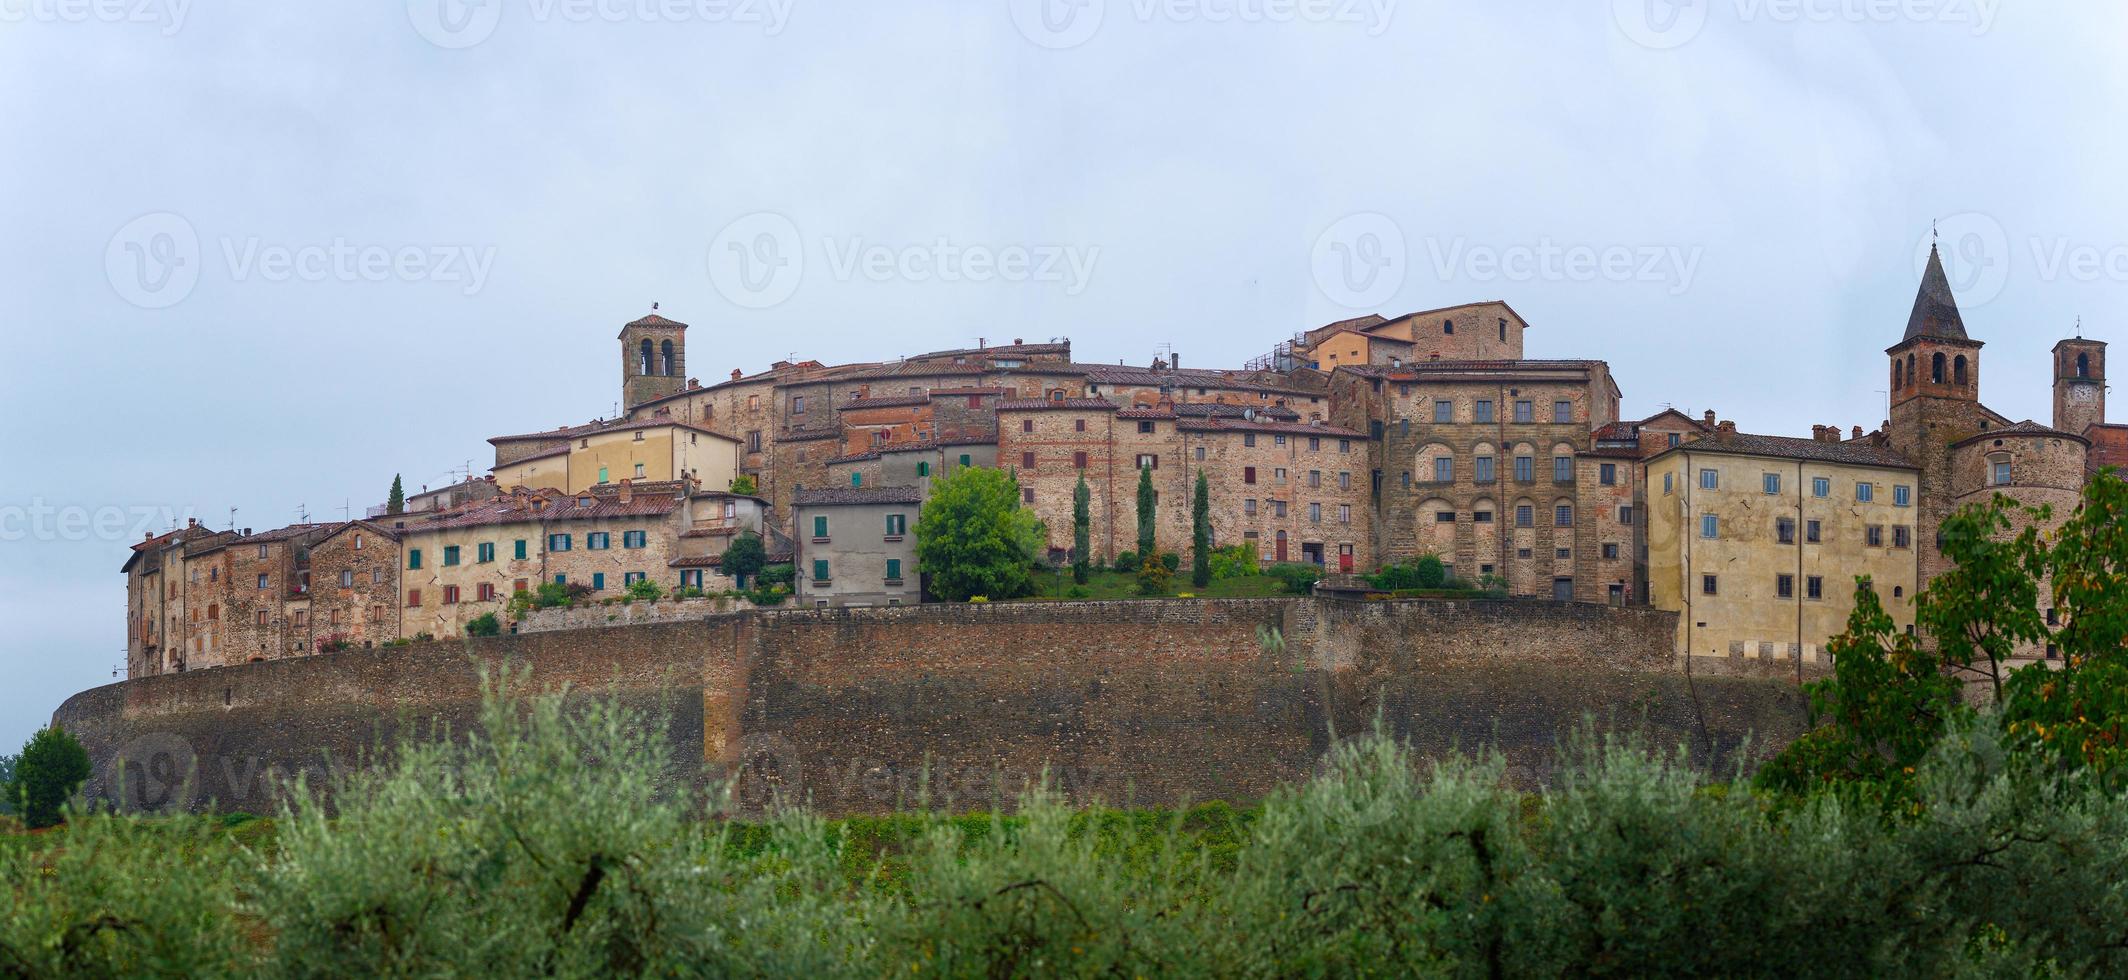 Panorama des mittelalterlichen Dorfes Anghiari in der Toskana - Italien foto